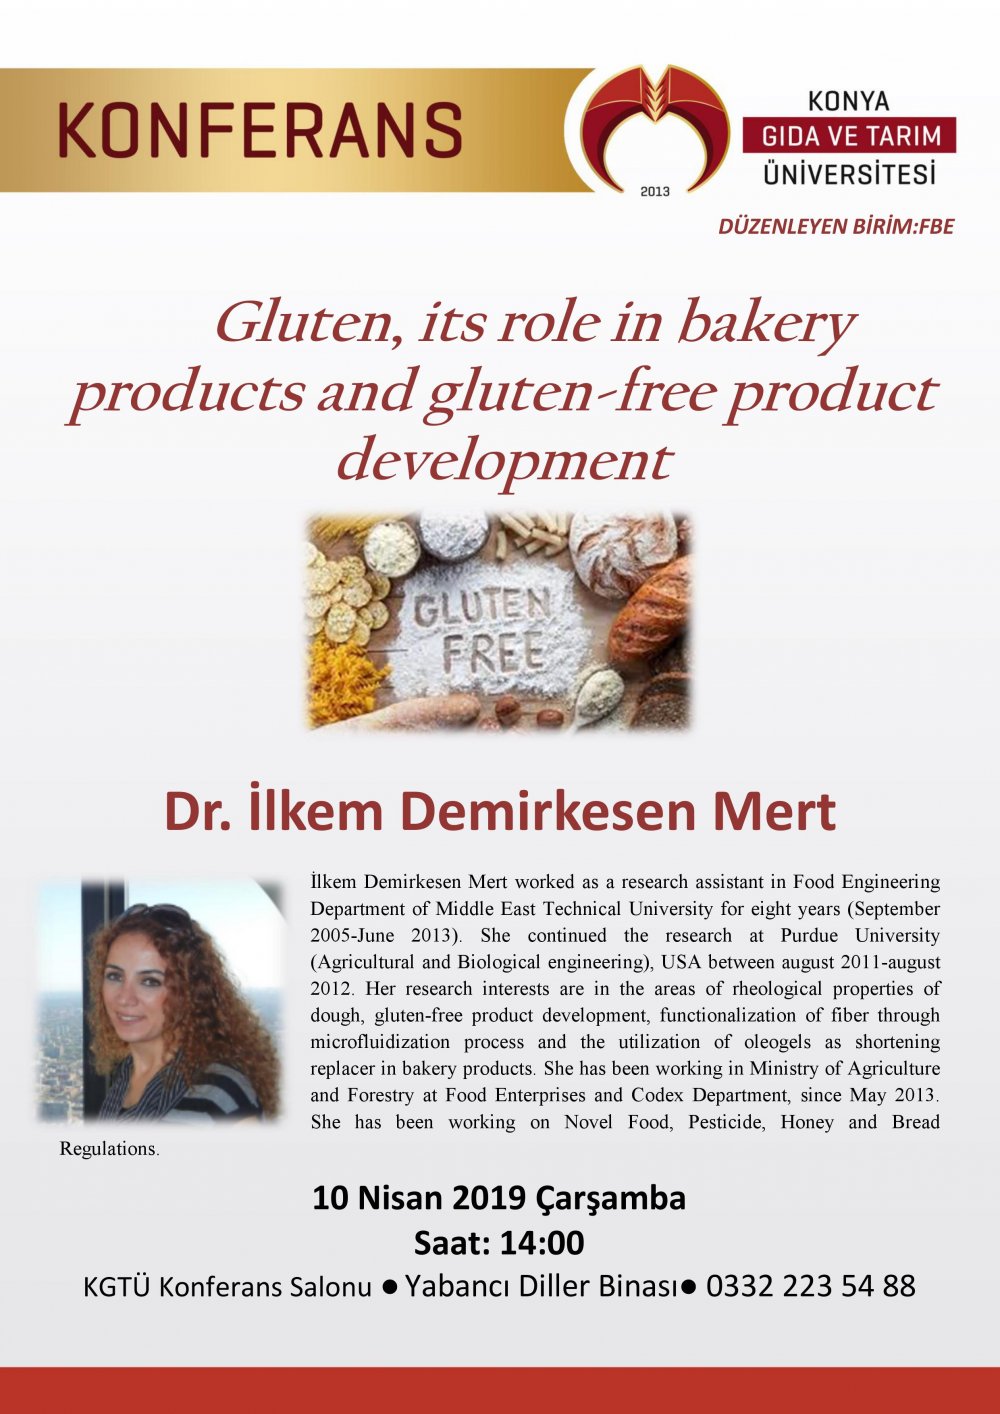 Konferans - Gluten, its role in bakery products and gluten-free product development / 10 Nisan 2019 Çarşamba